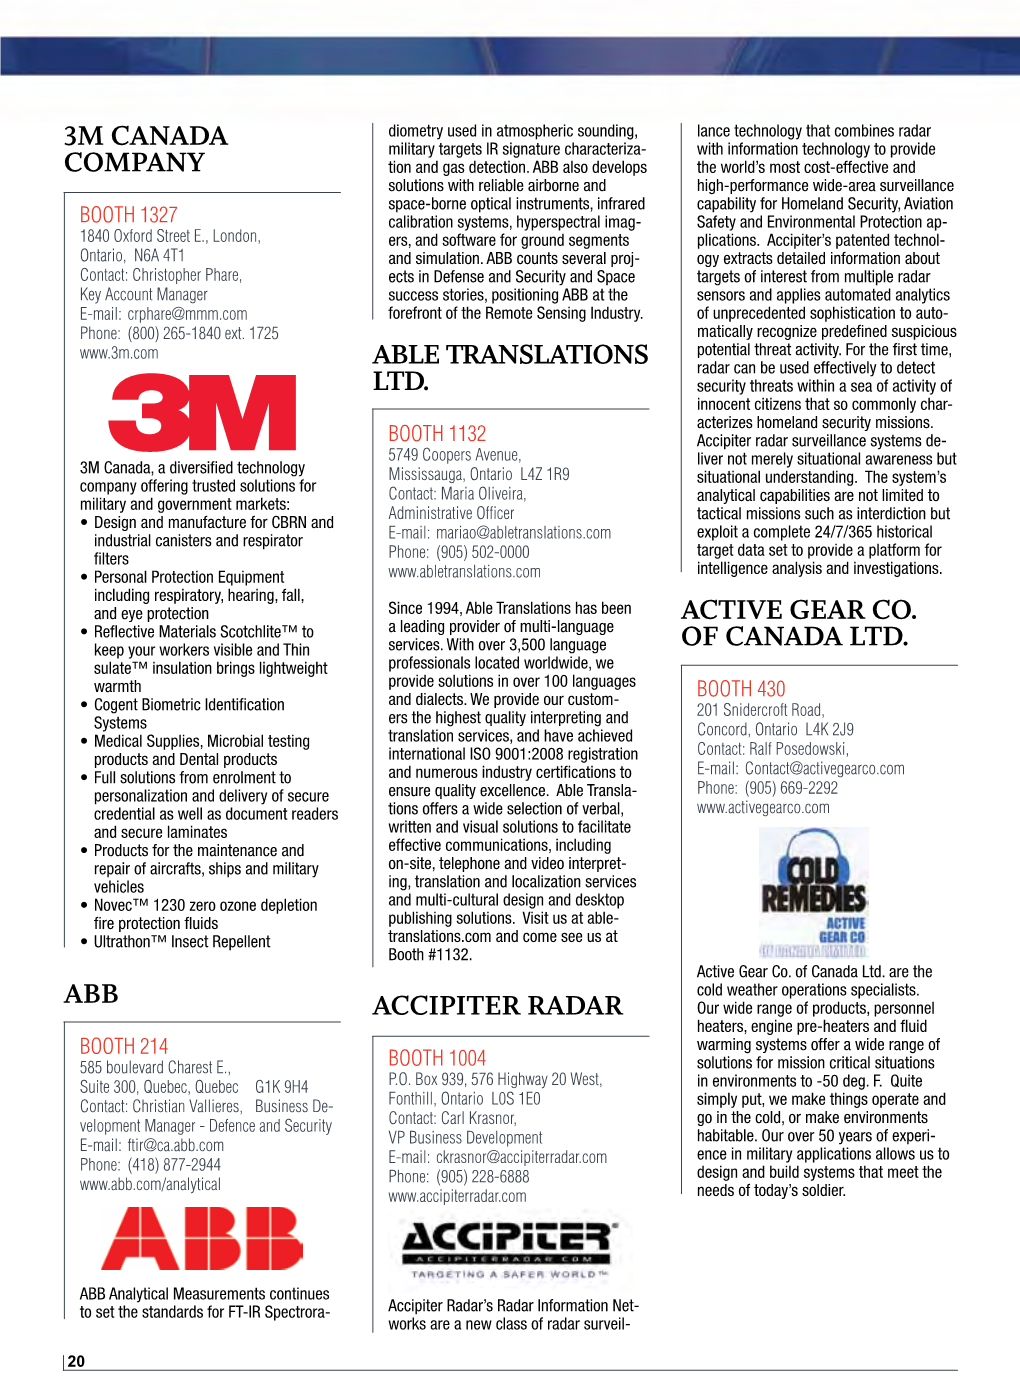 3M CANADA Company ABB Able Translations Ltd. ACCIPITER